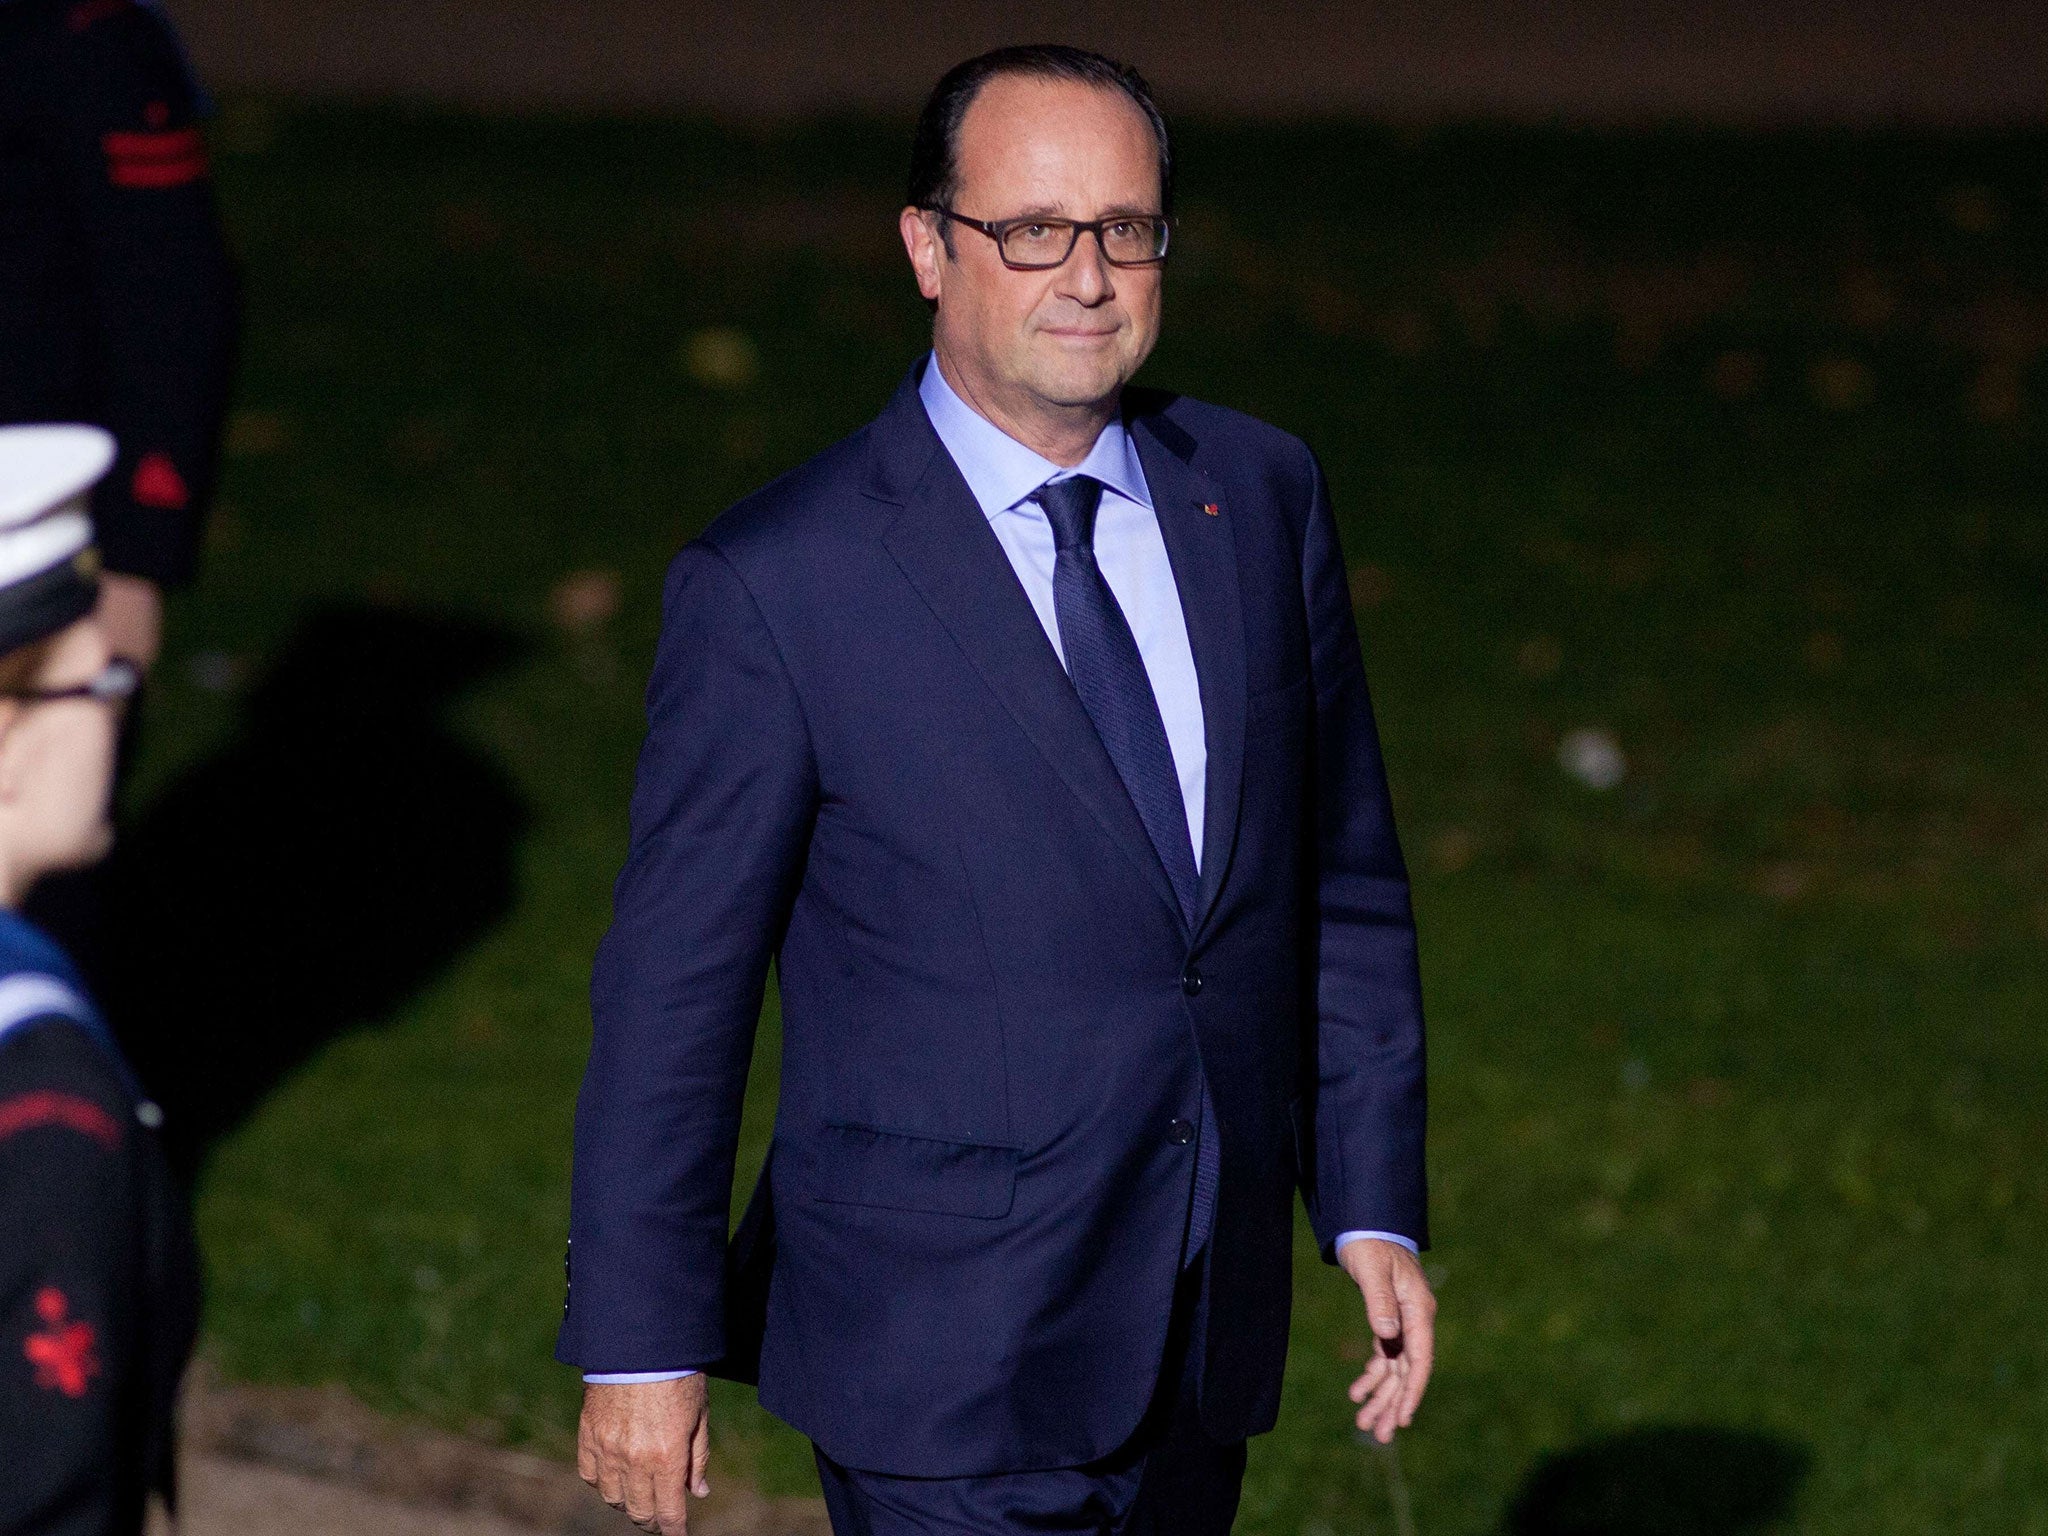 France's President Francois Hollande arrives for the NATO Summit dinner at Cardiff Castle on Thursday